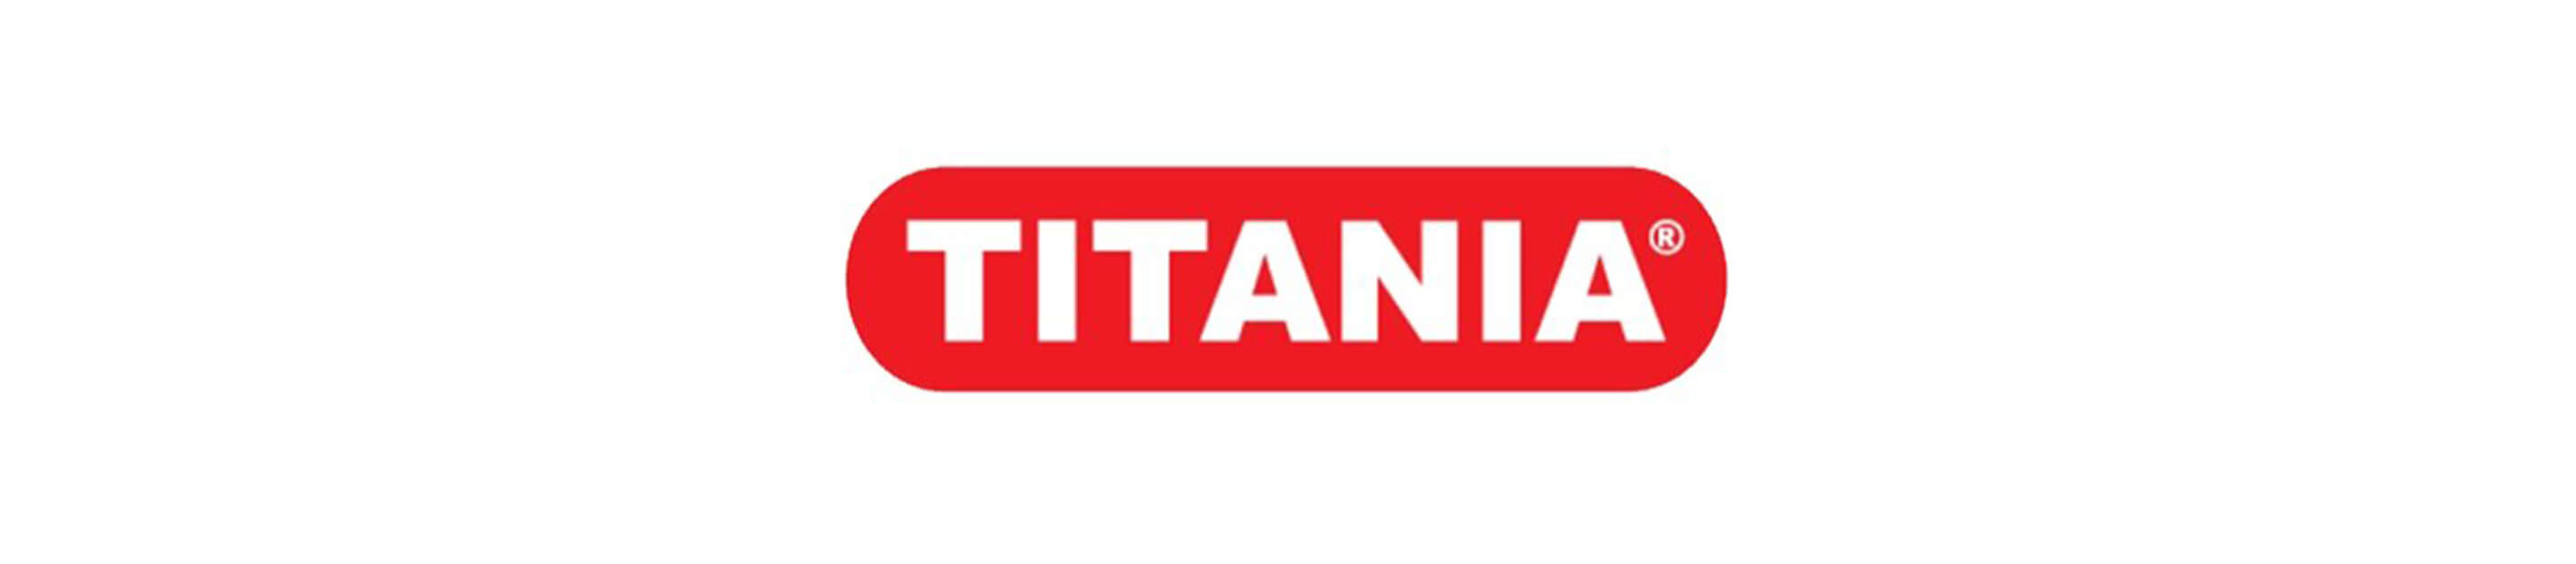 تيتانيا